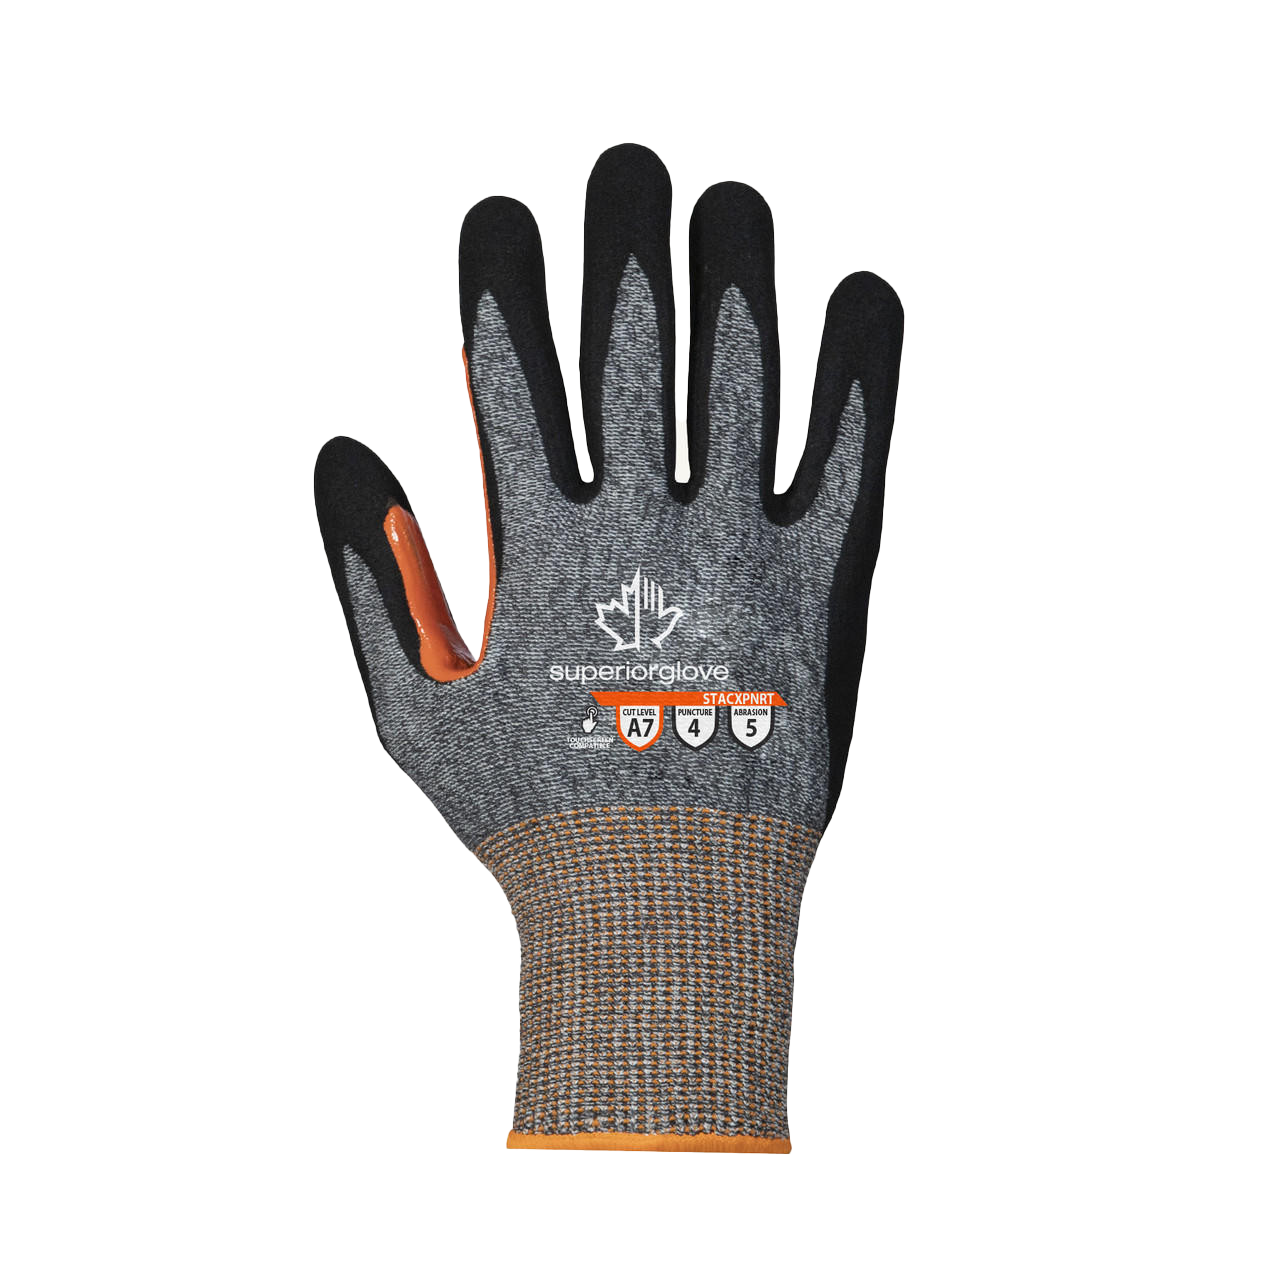 Superior A7 Cut-Resistant Gloves